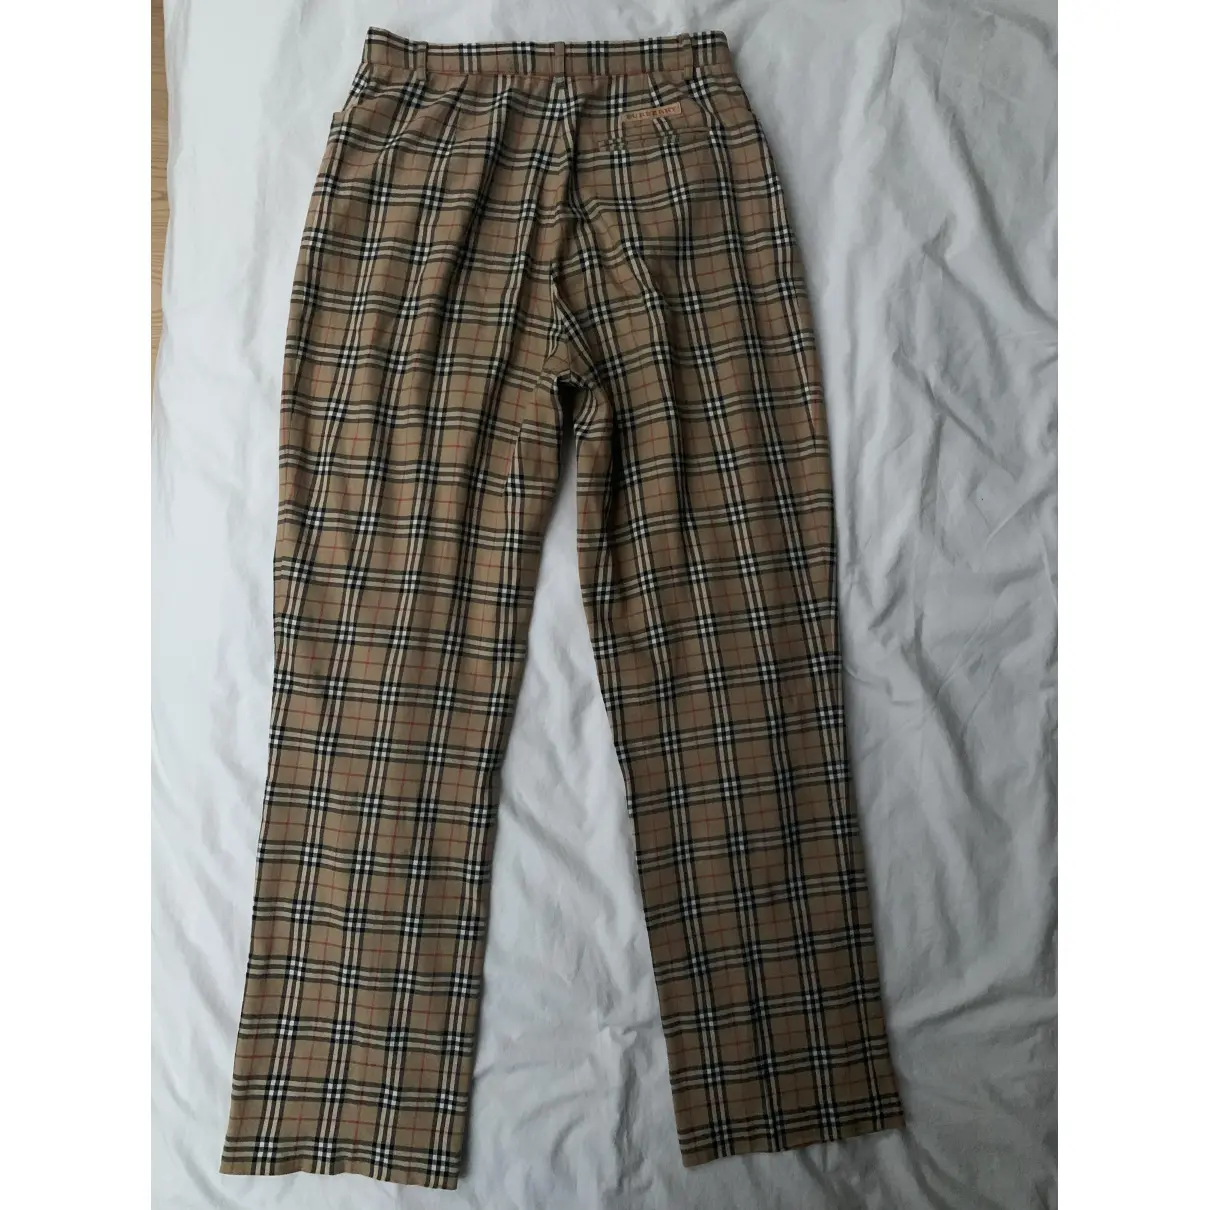 Buy Burberry Chino pants online